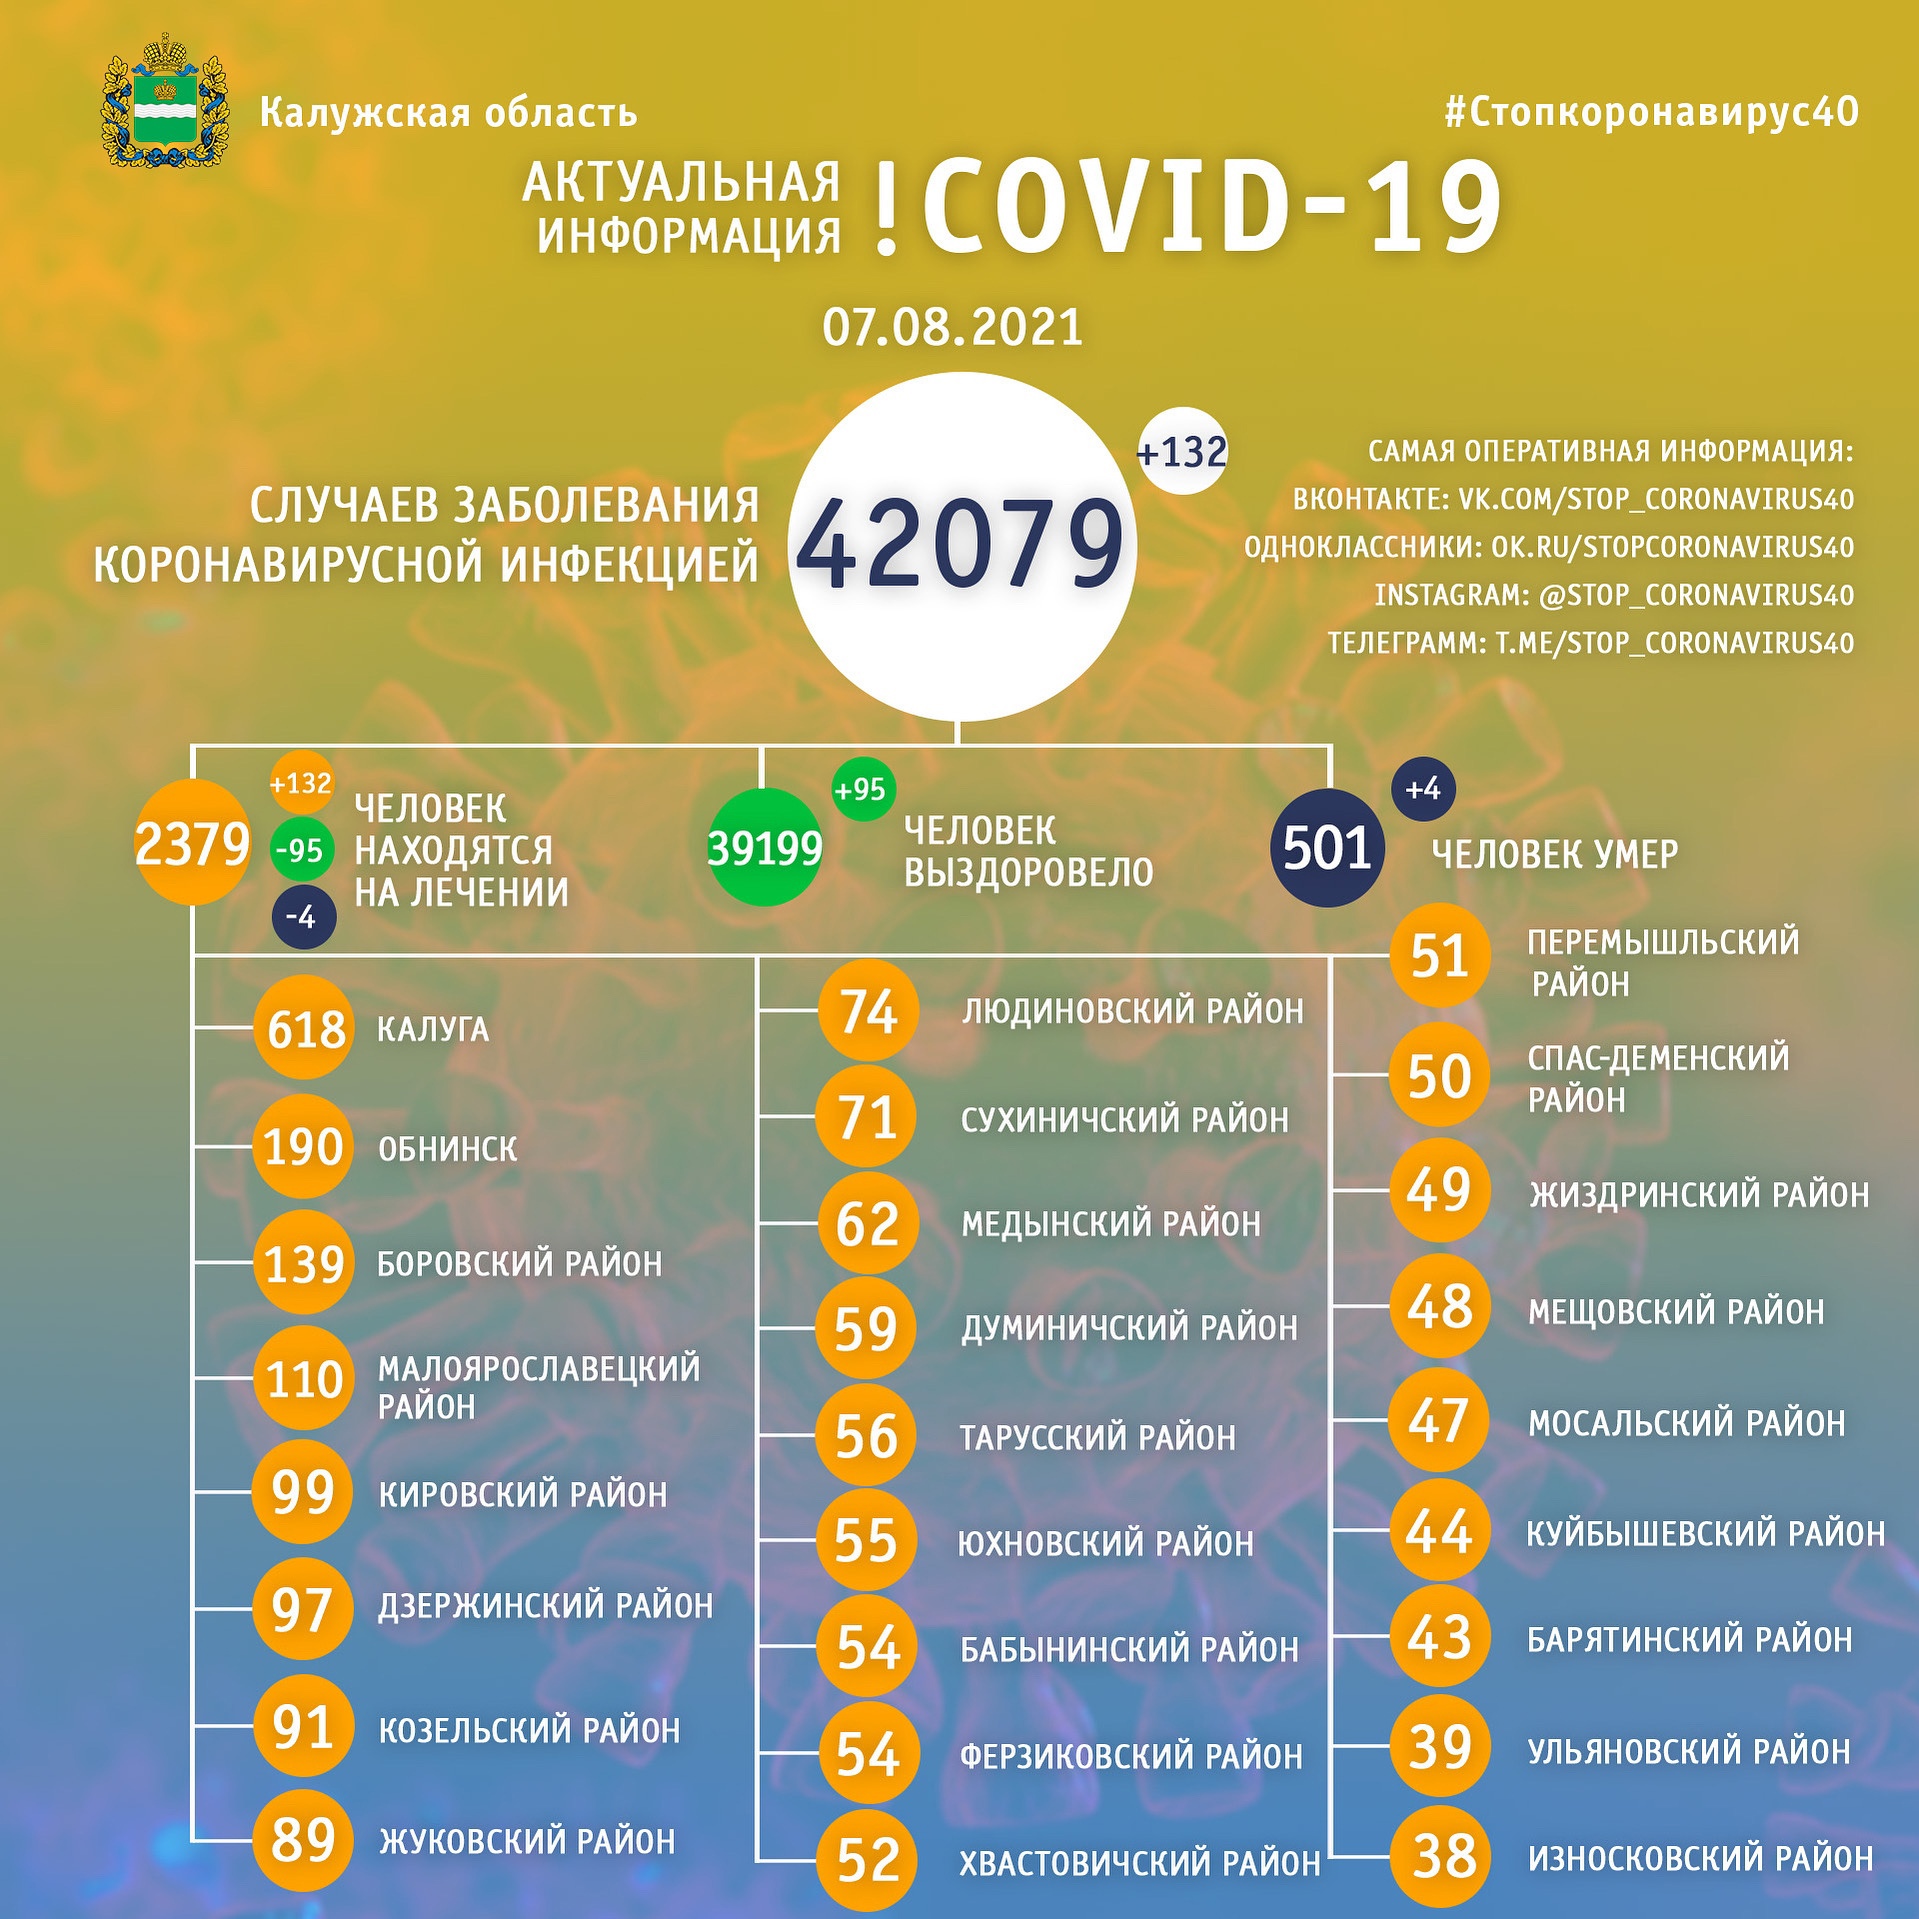 Официальная статистика по коронавирусу в Калужской области на 7 августа 2021 года.